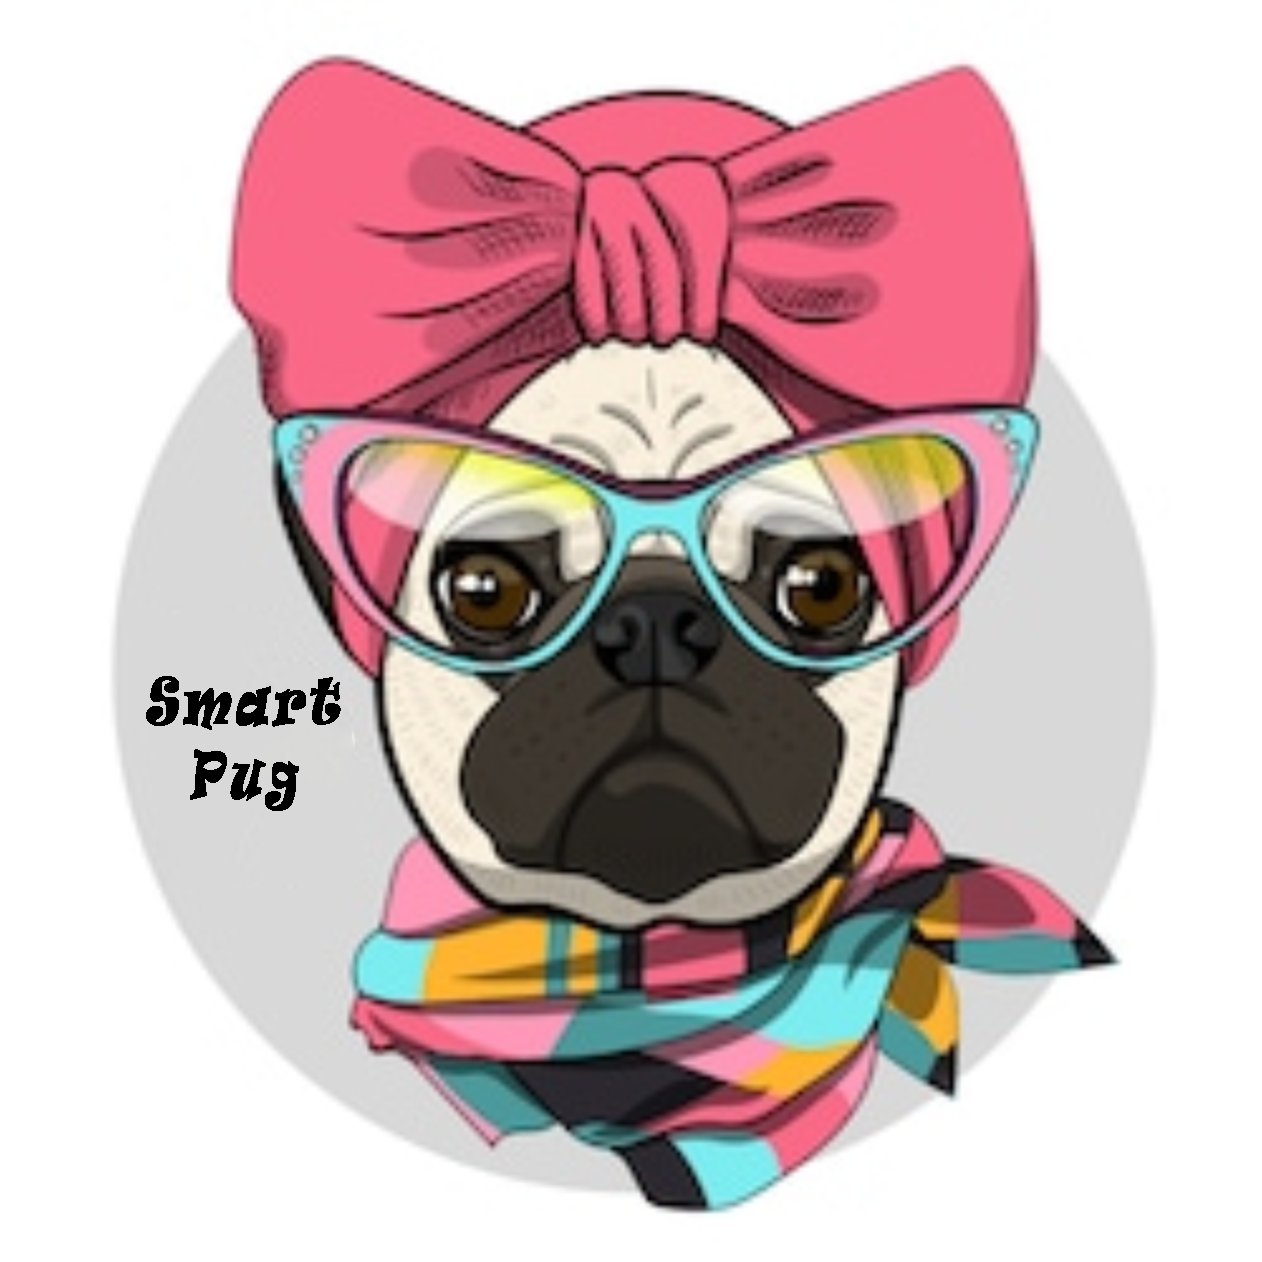 Smart Female Pug with Glasses